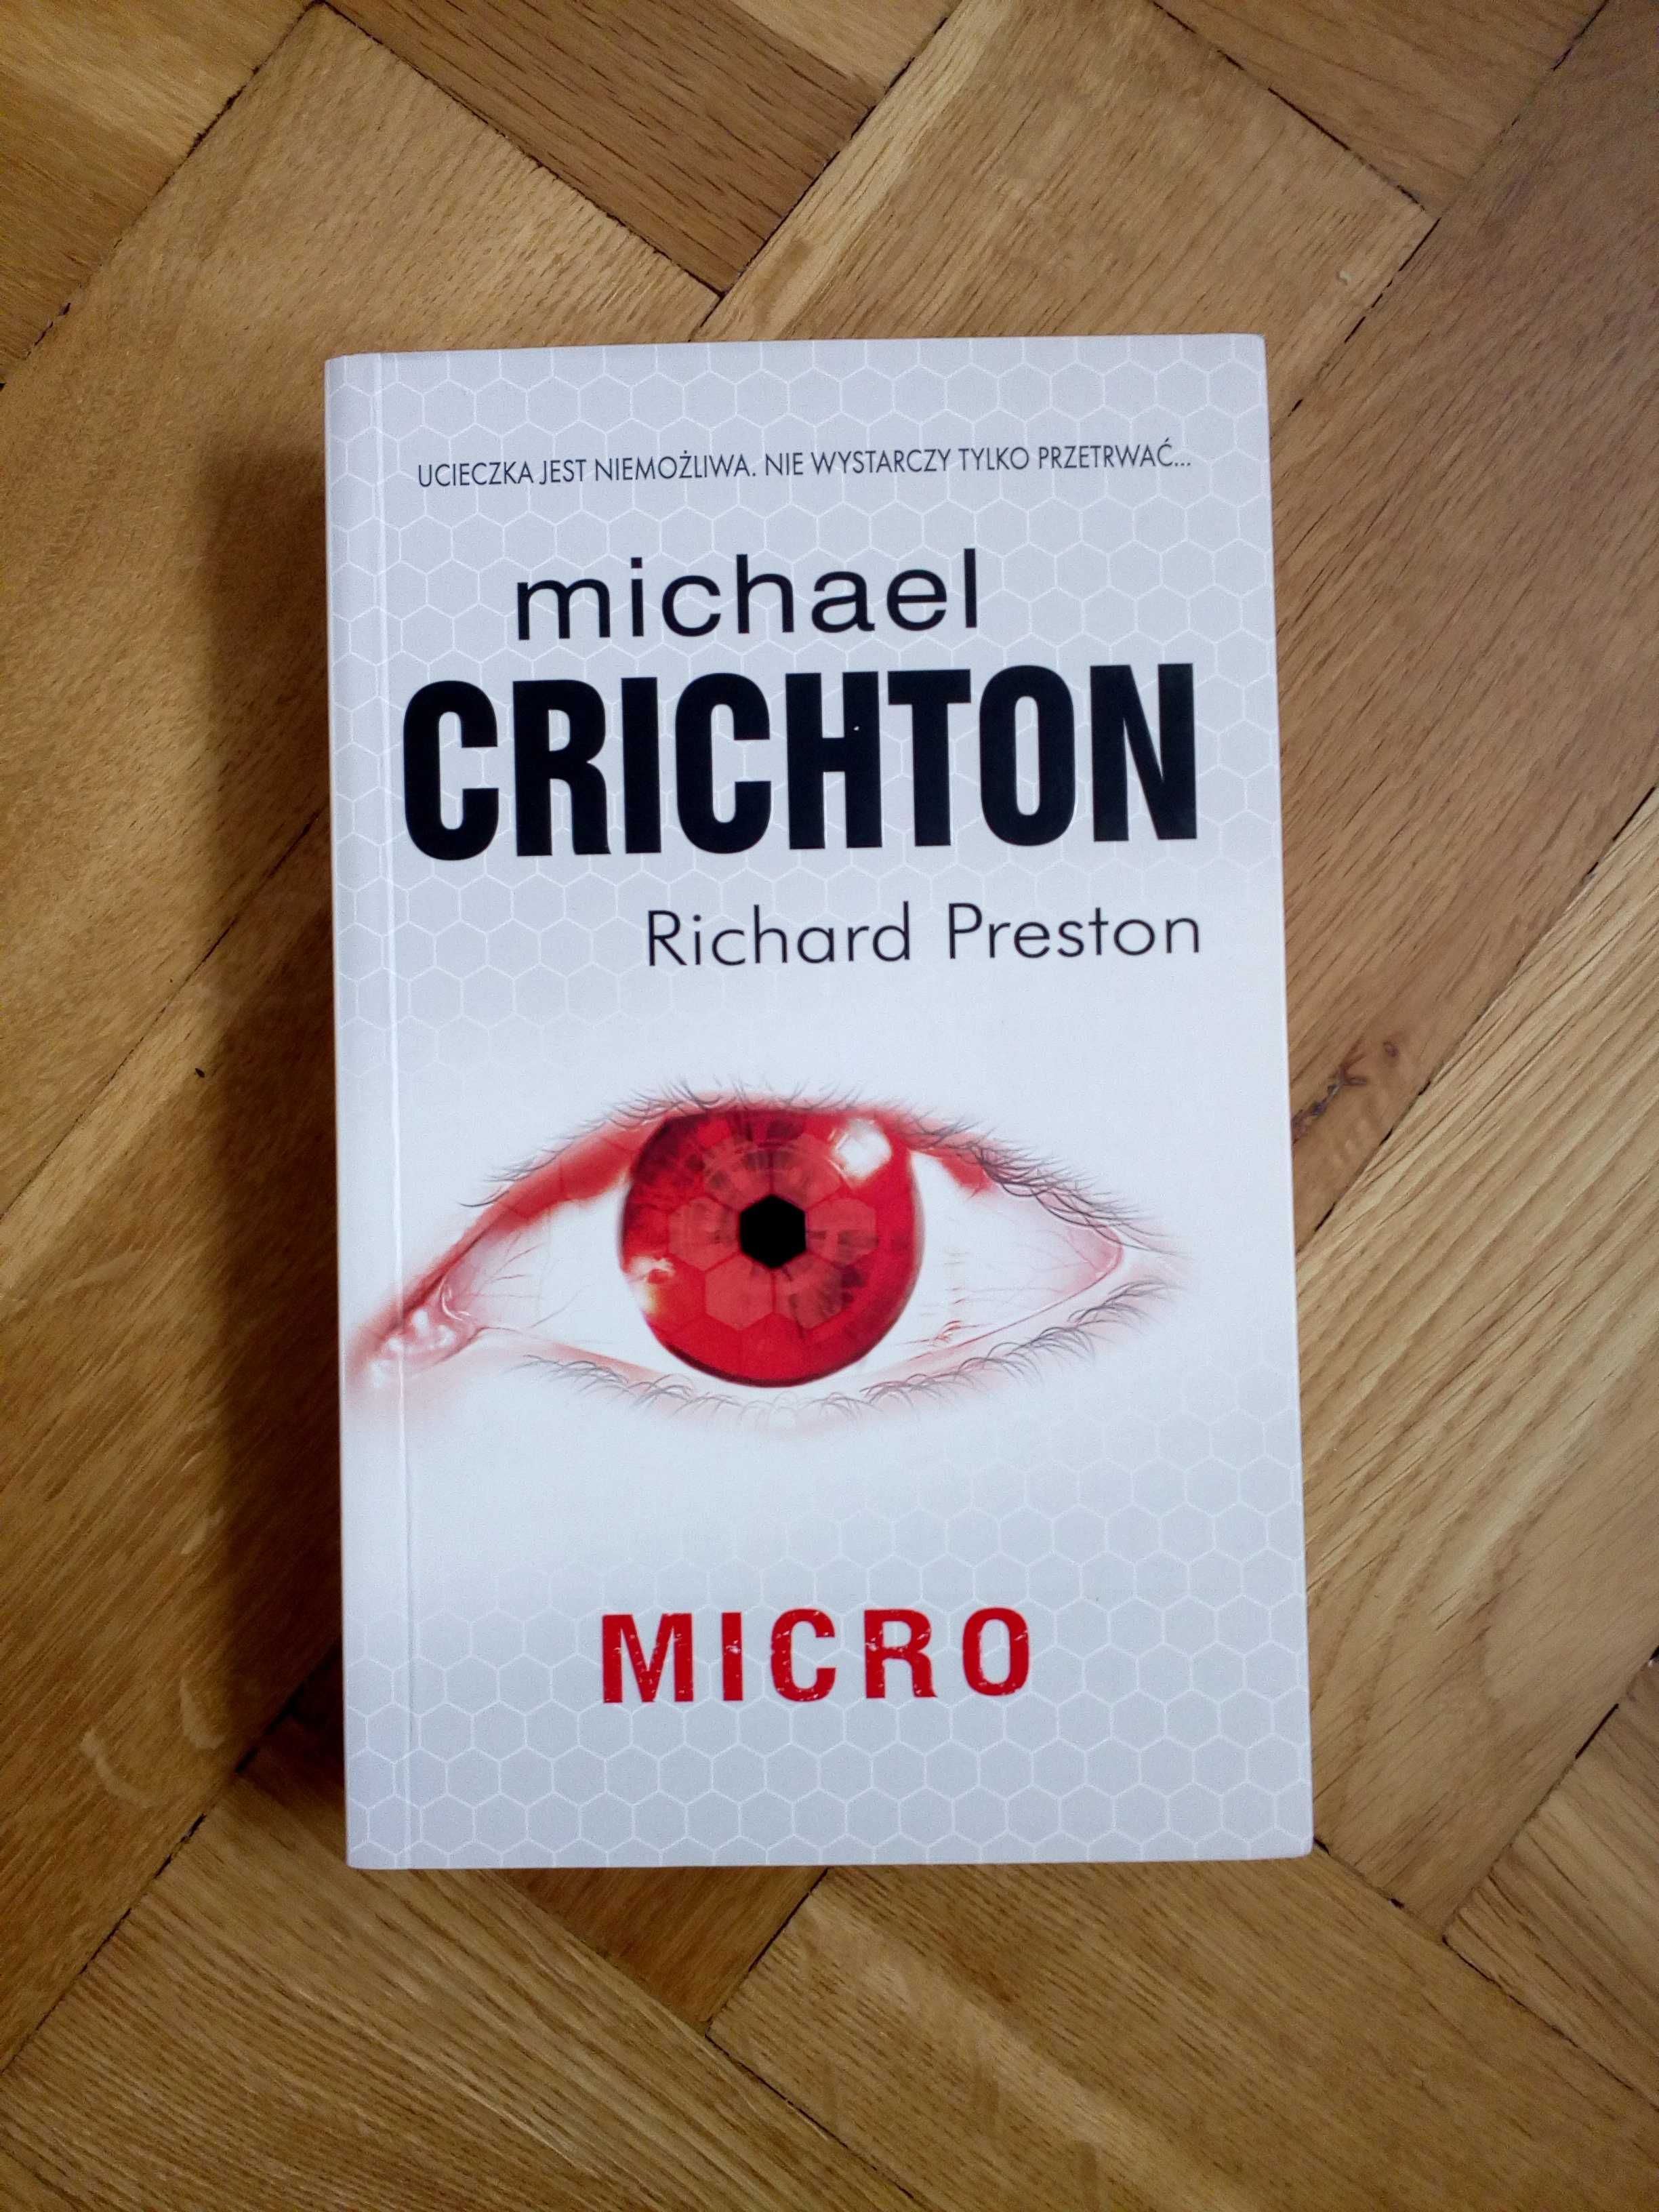 Michael Crichton – Micro - thriller s-f, jak NOWA